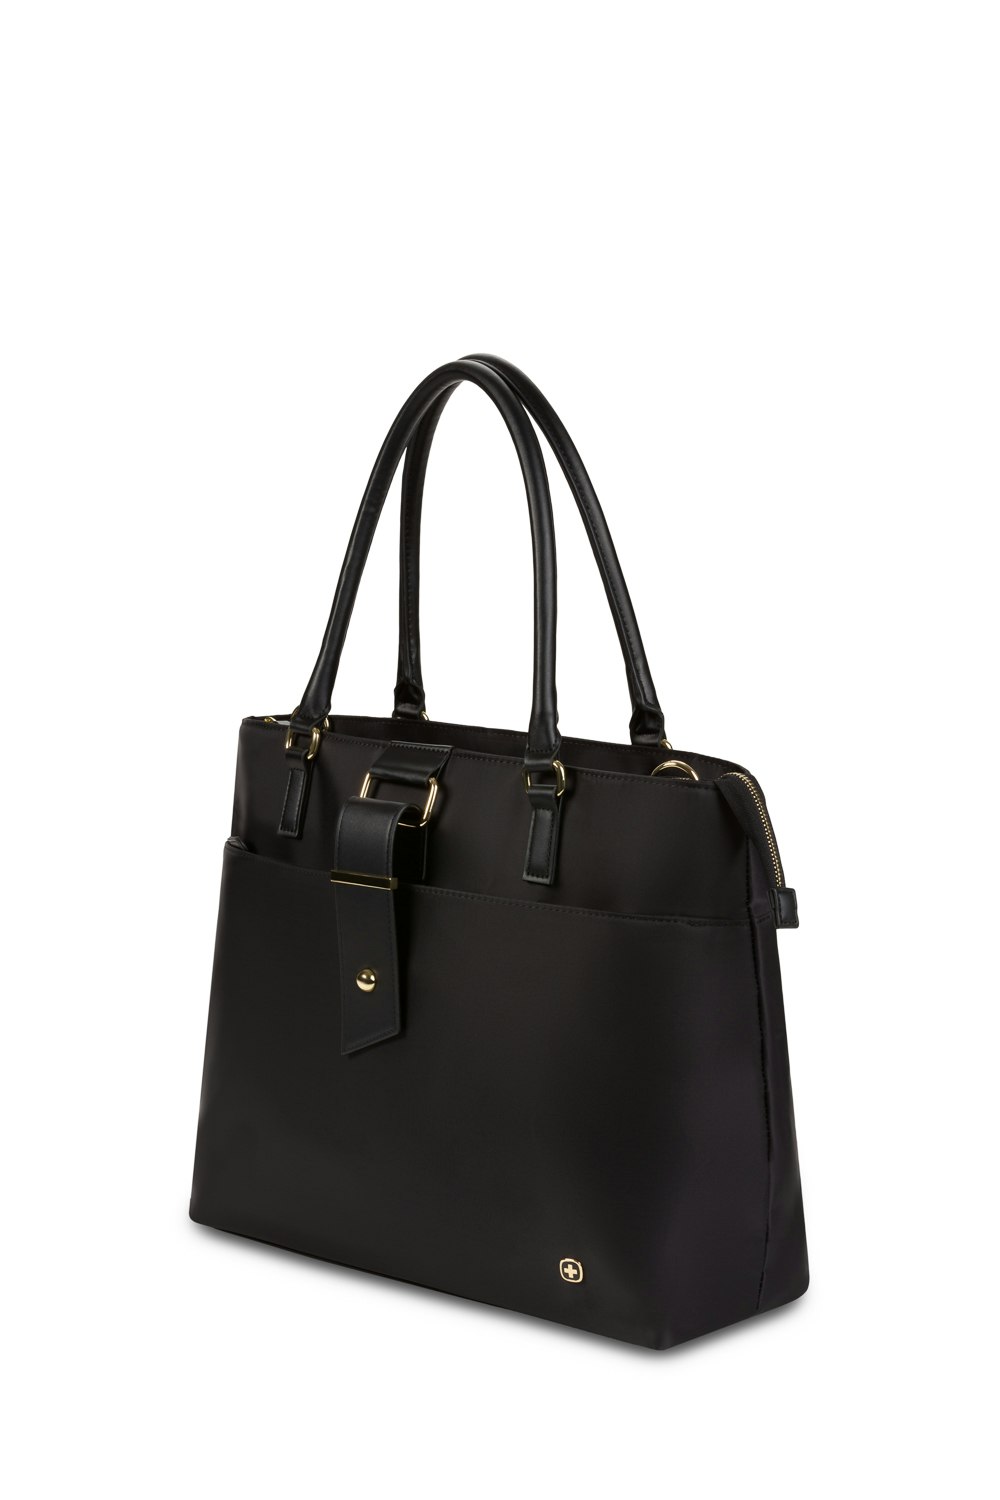 Black White Star Leather Tote Bag Large Capacity Shoulder Handbag Purse Work Laptop fit 15.6 inch for Women Lady Girls 